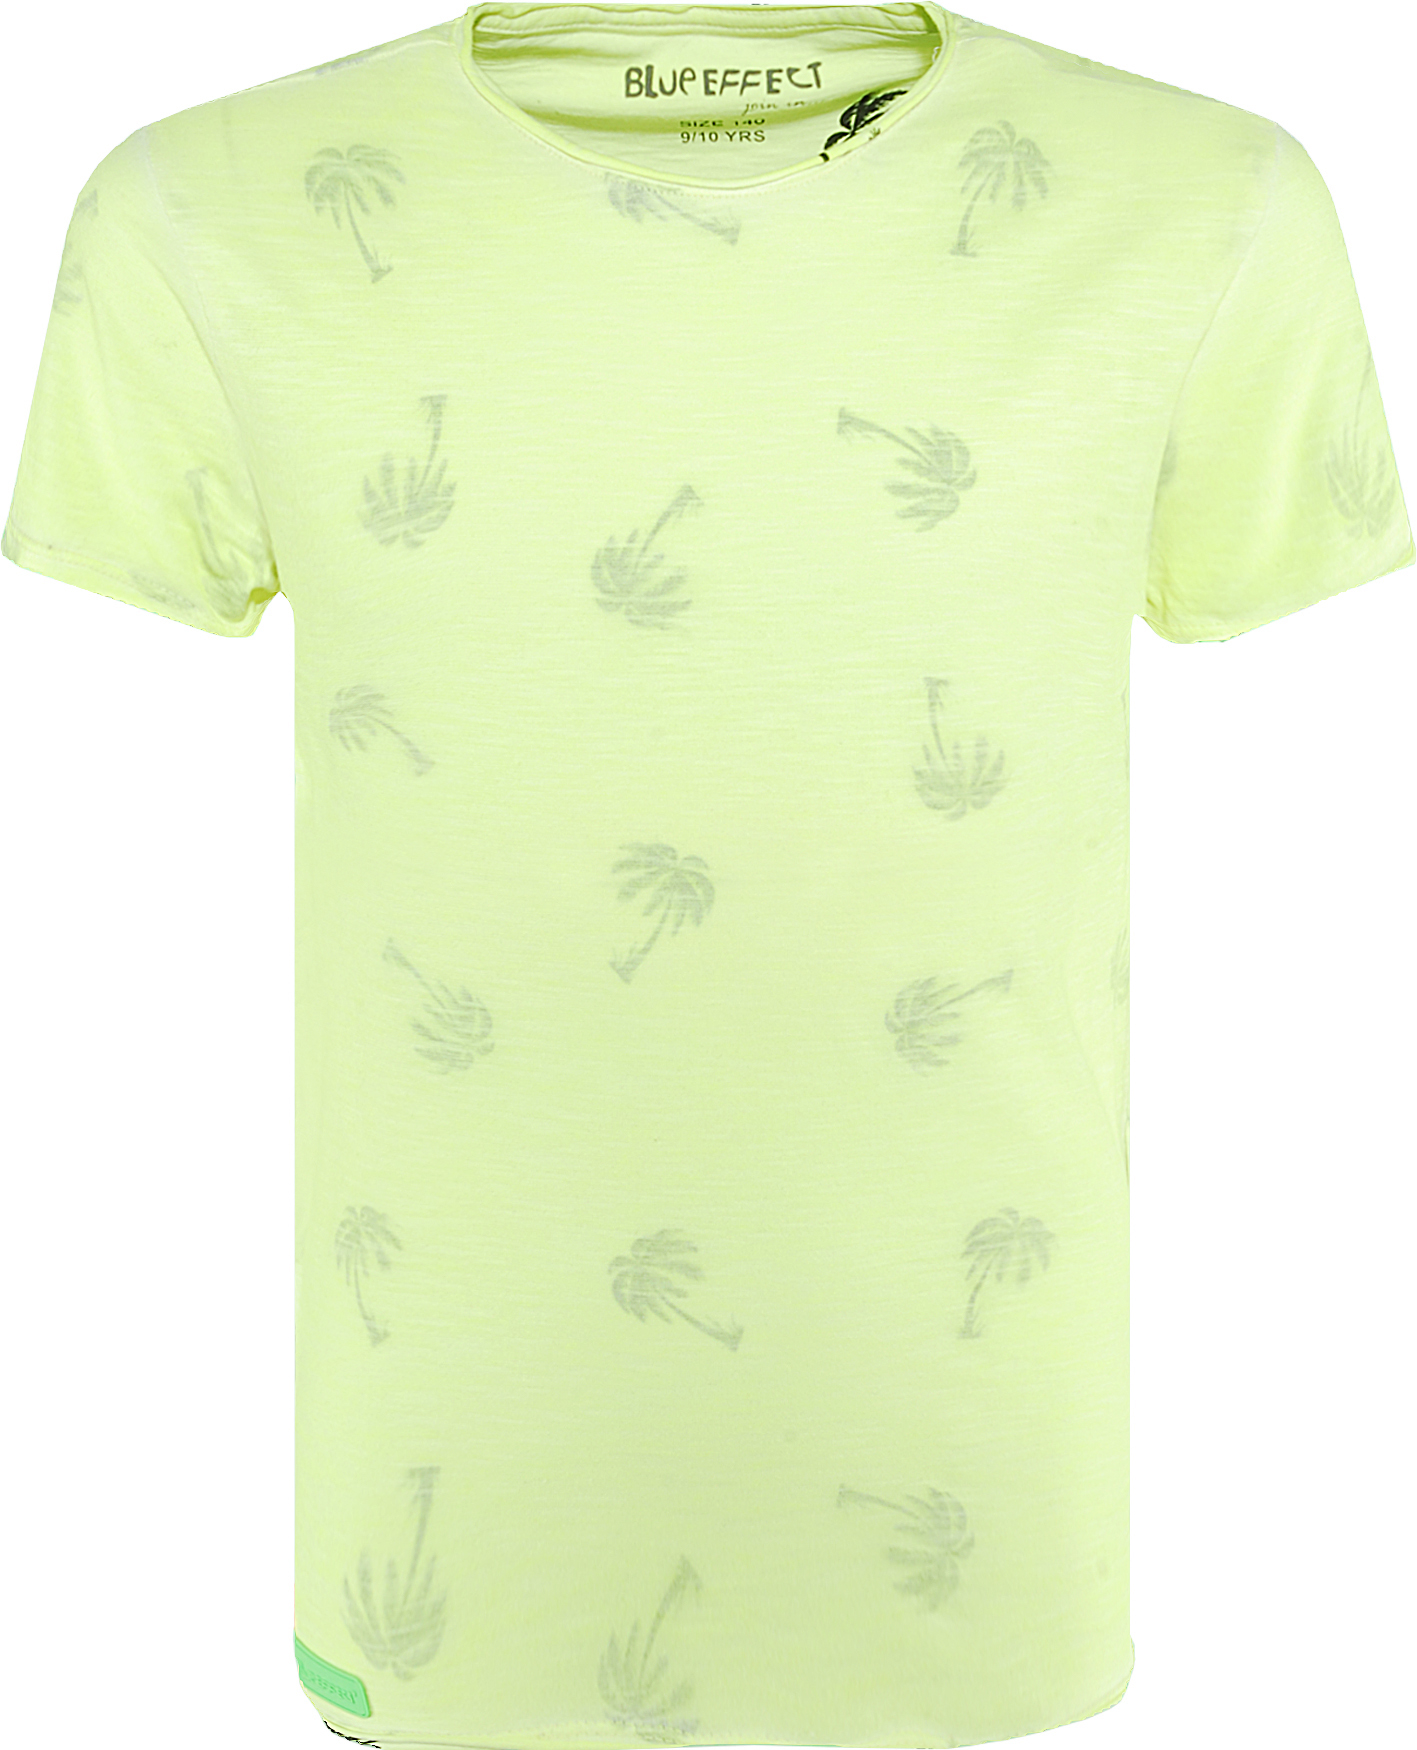 6054-Boys T-Shirt -Palms allover